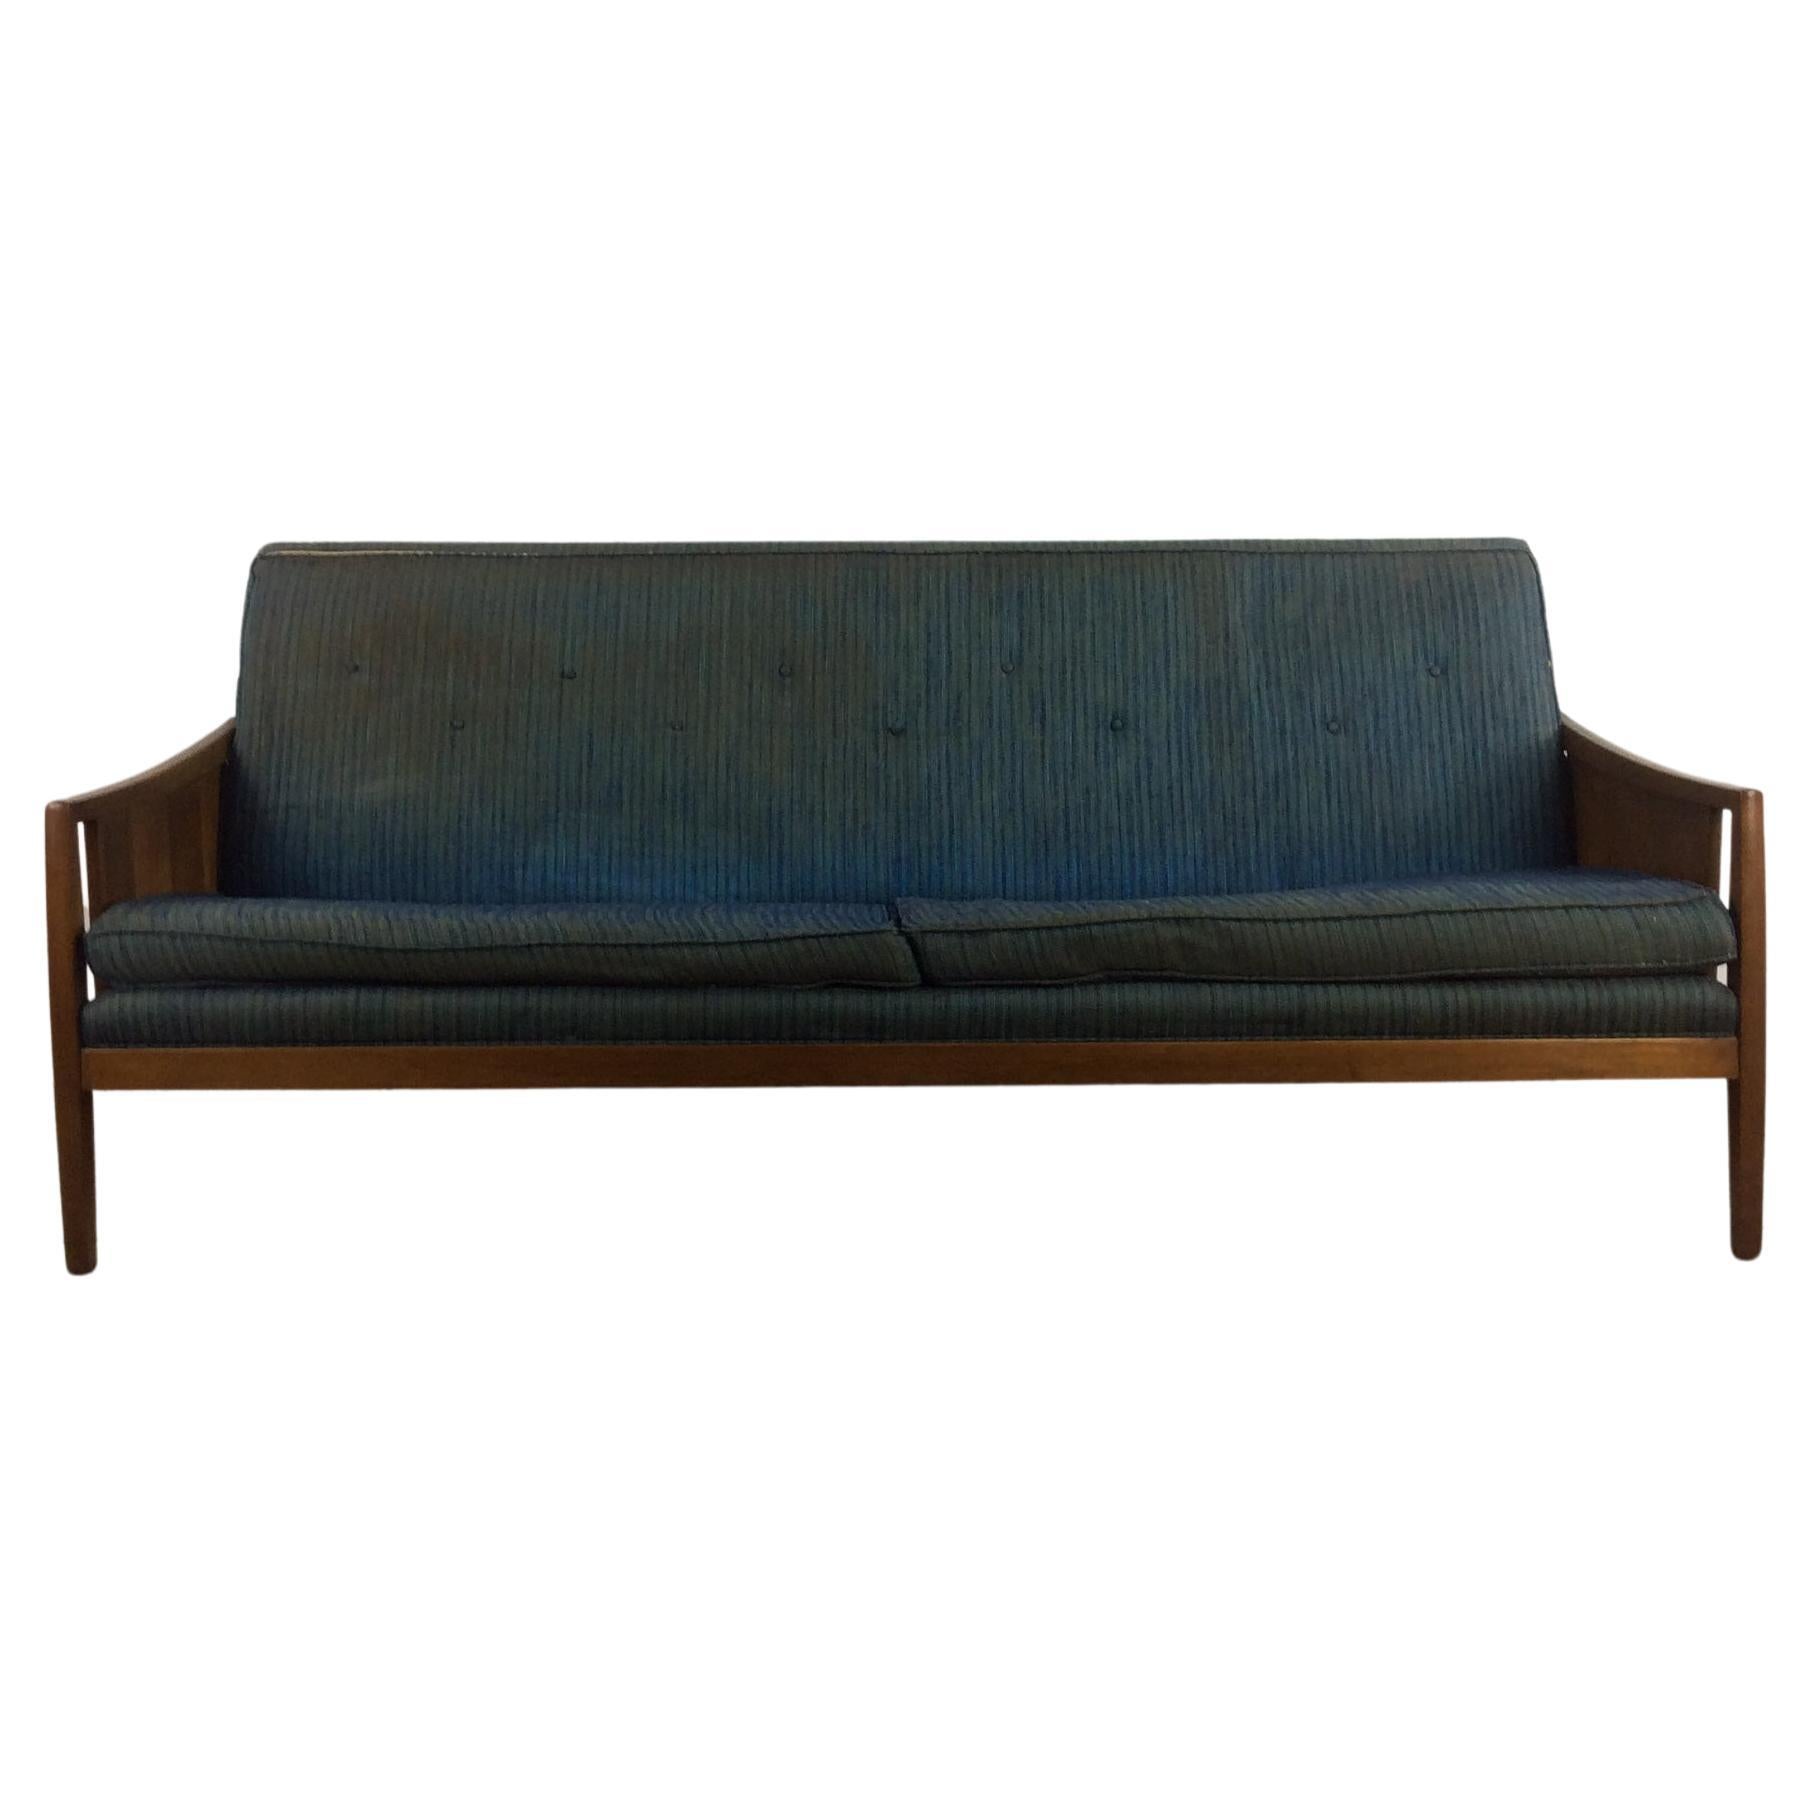 Mid-Century Modern Walnut Frame Sofa by Drexel For Sale